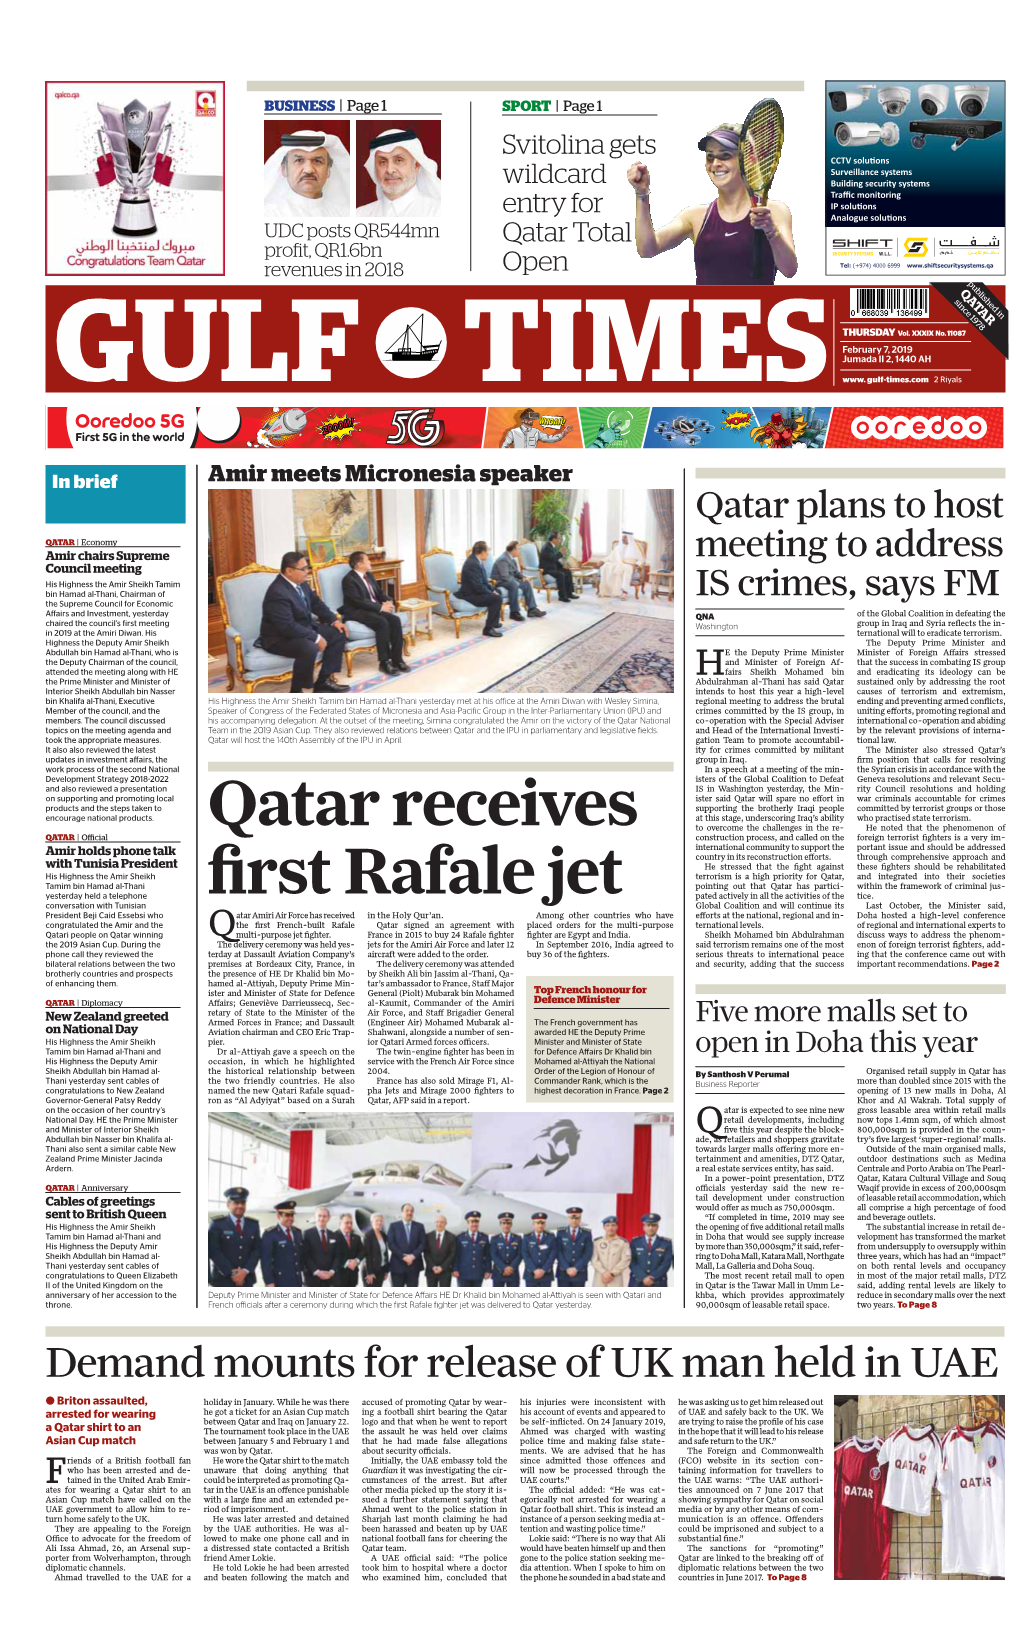 Qatar Receives First Rafale